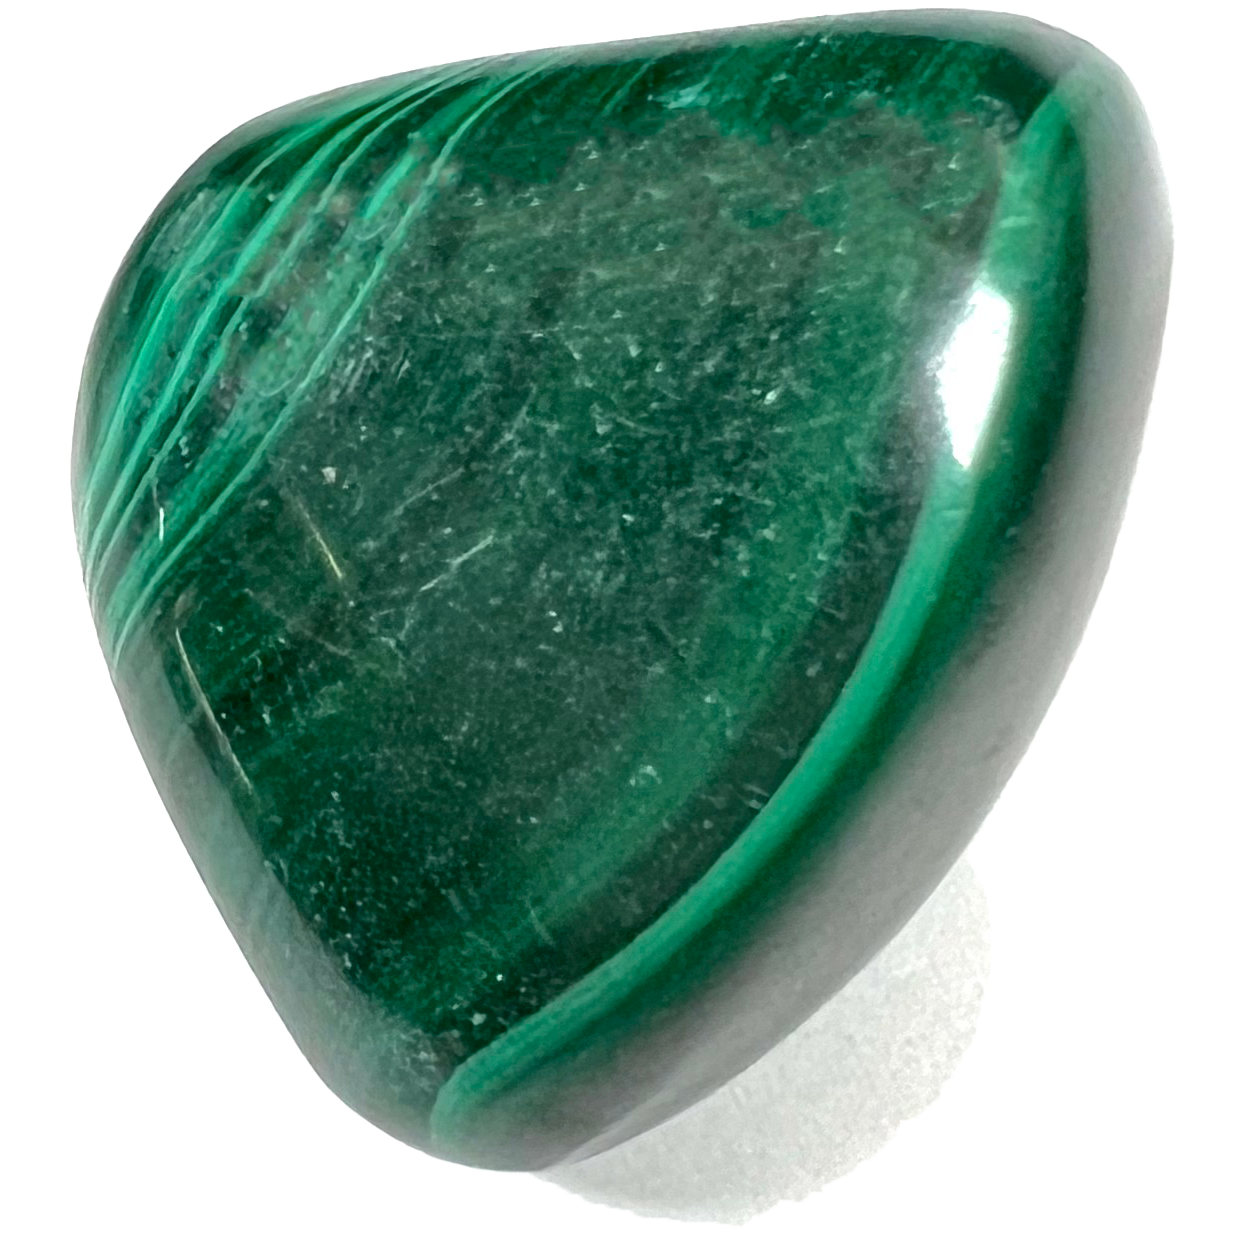 A tumble polished green striped malachite stone.